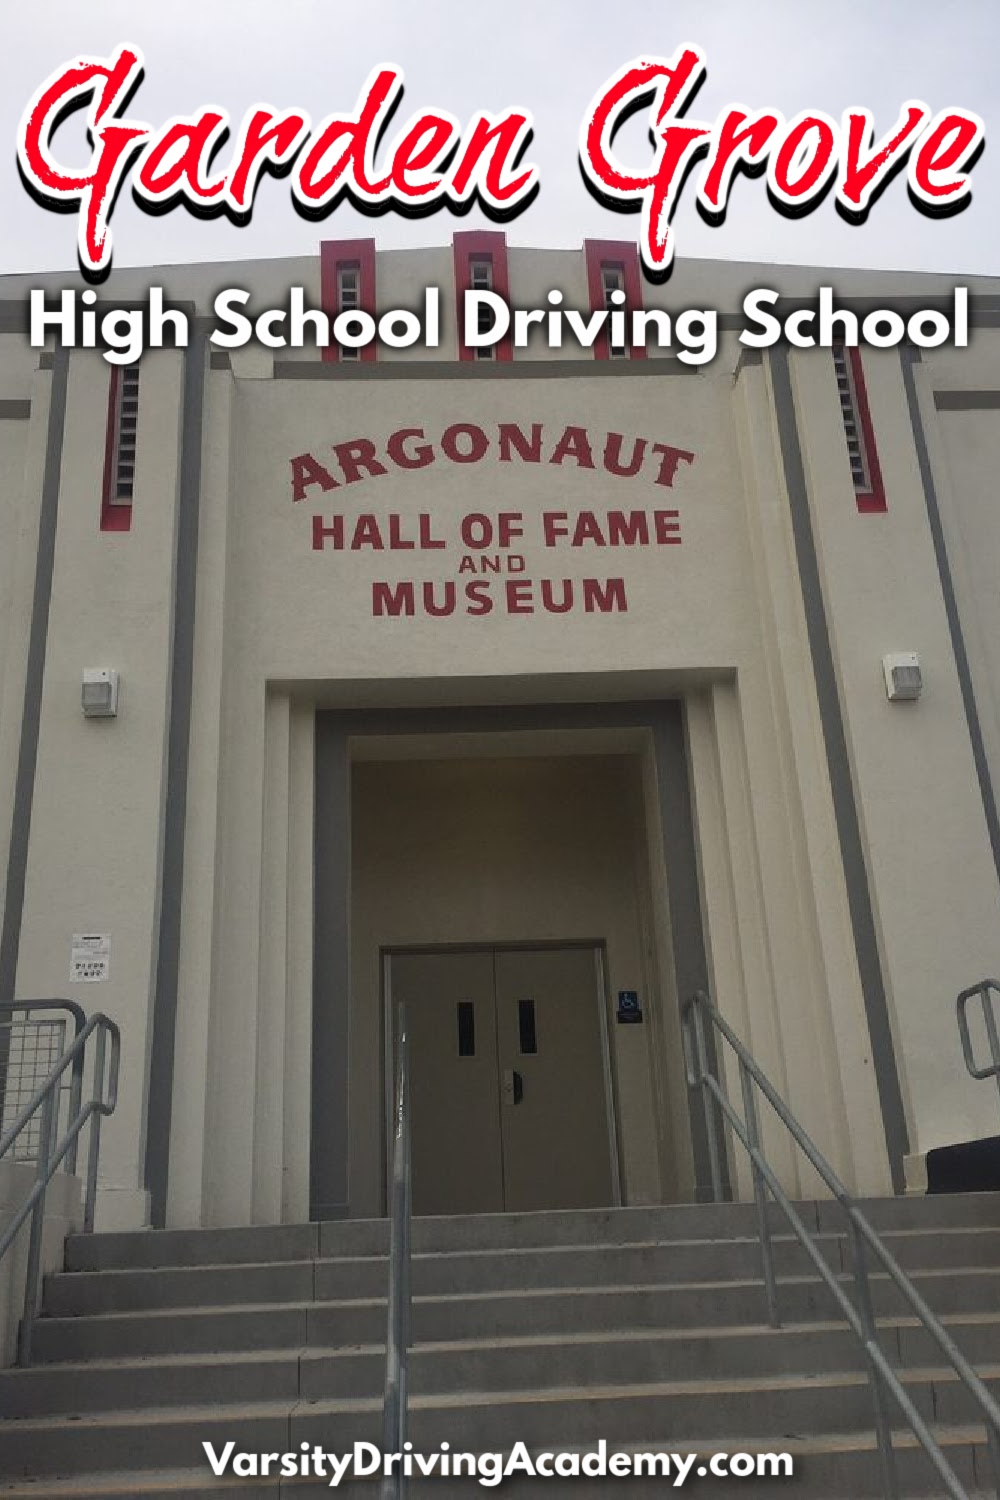 Garden Grove High School Driving School - Varsity Driving Academy